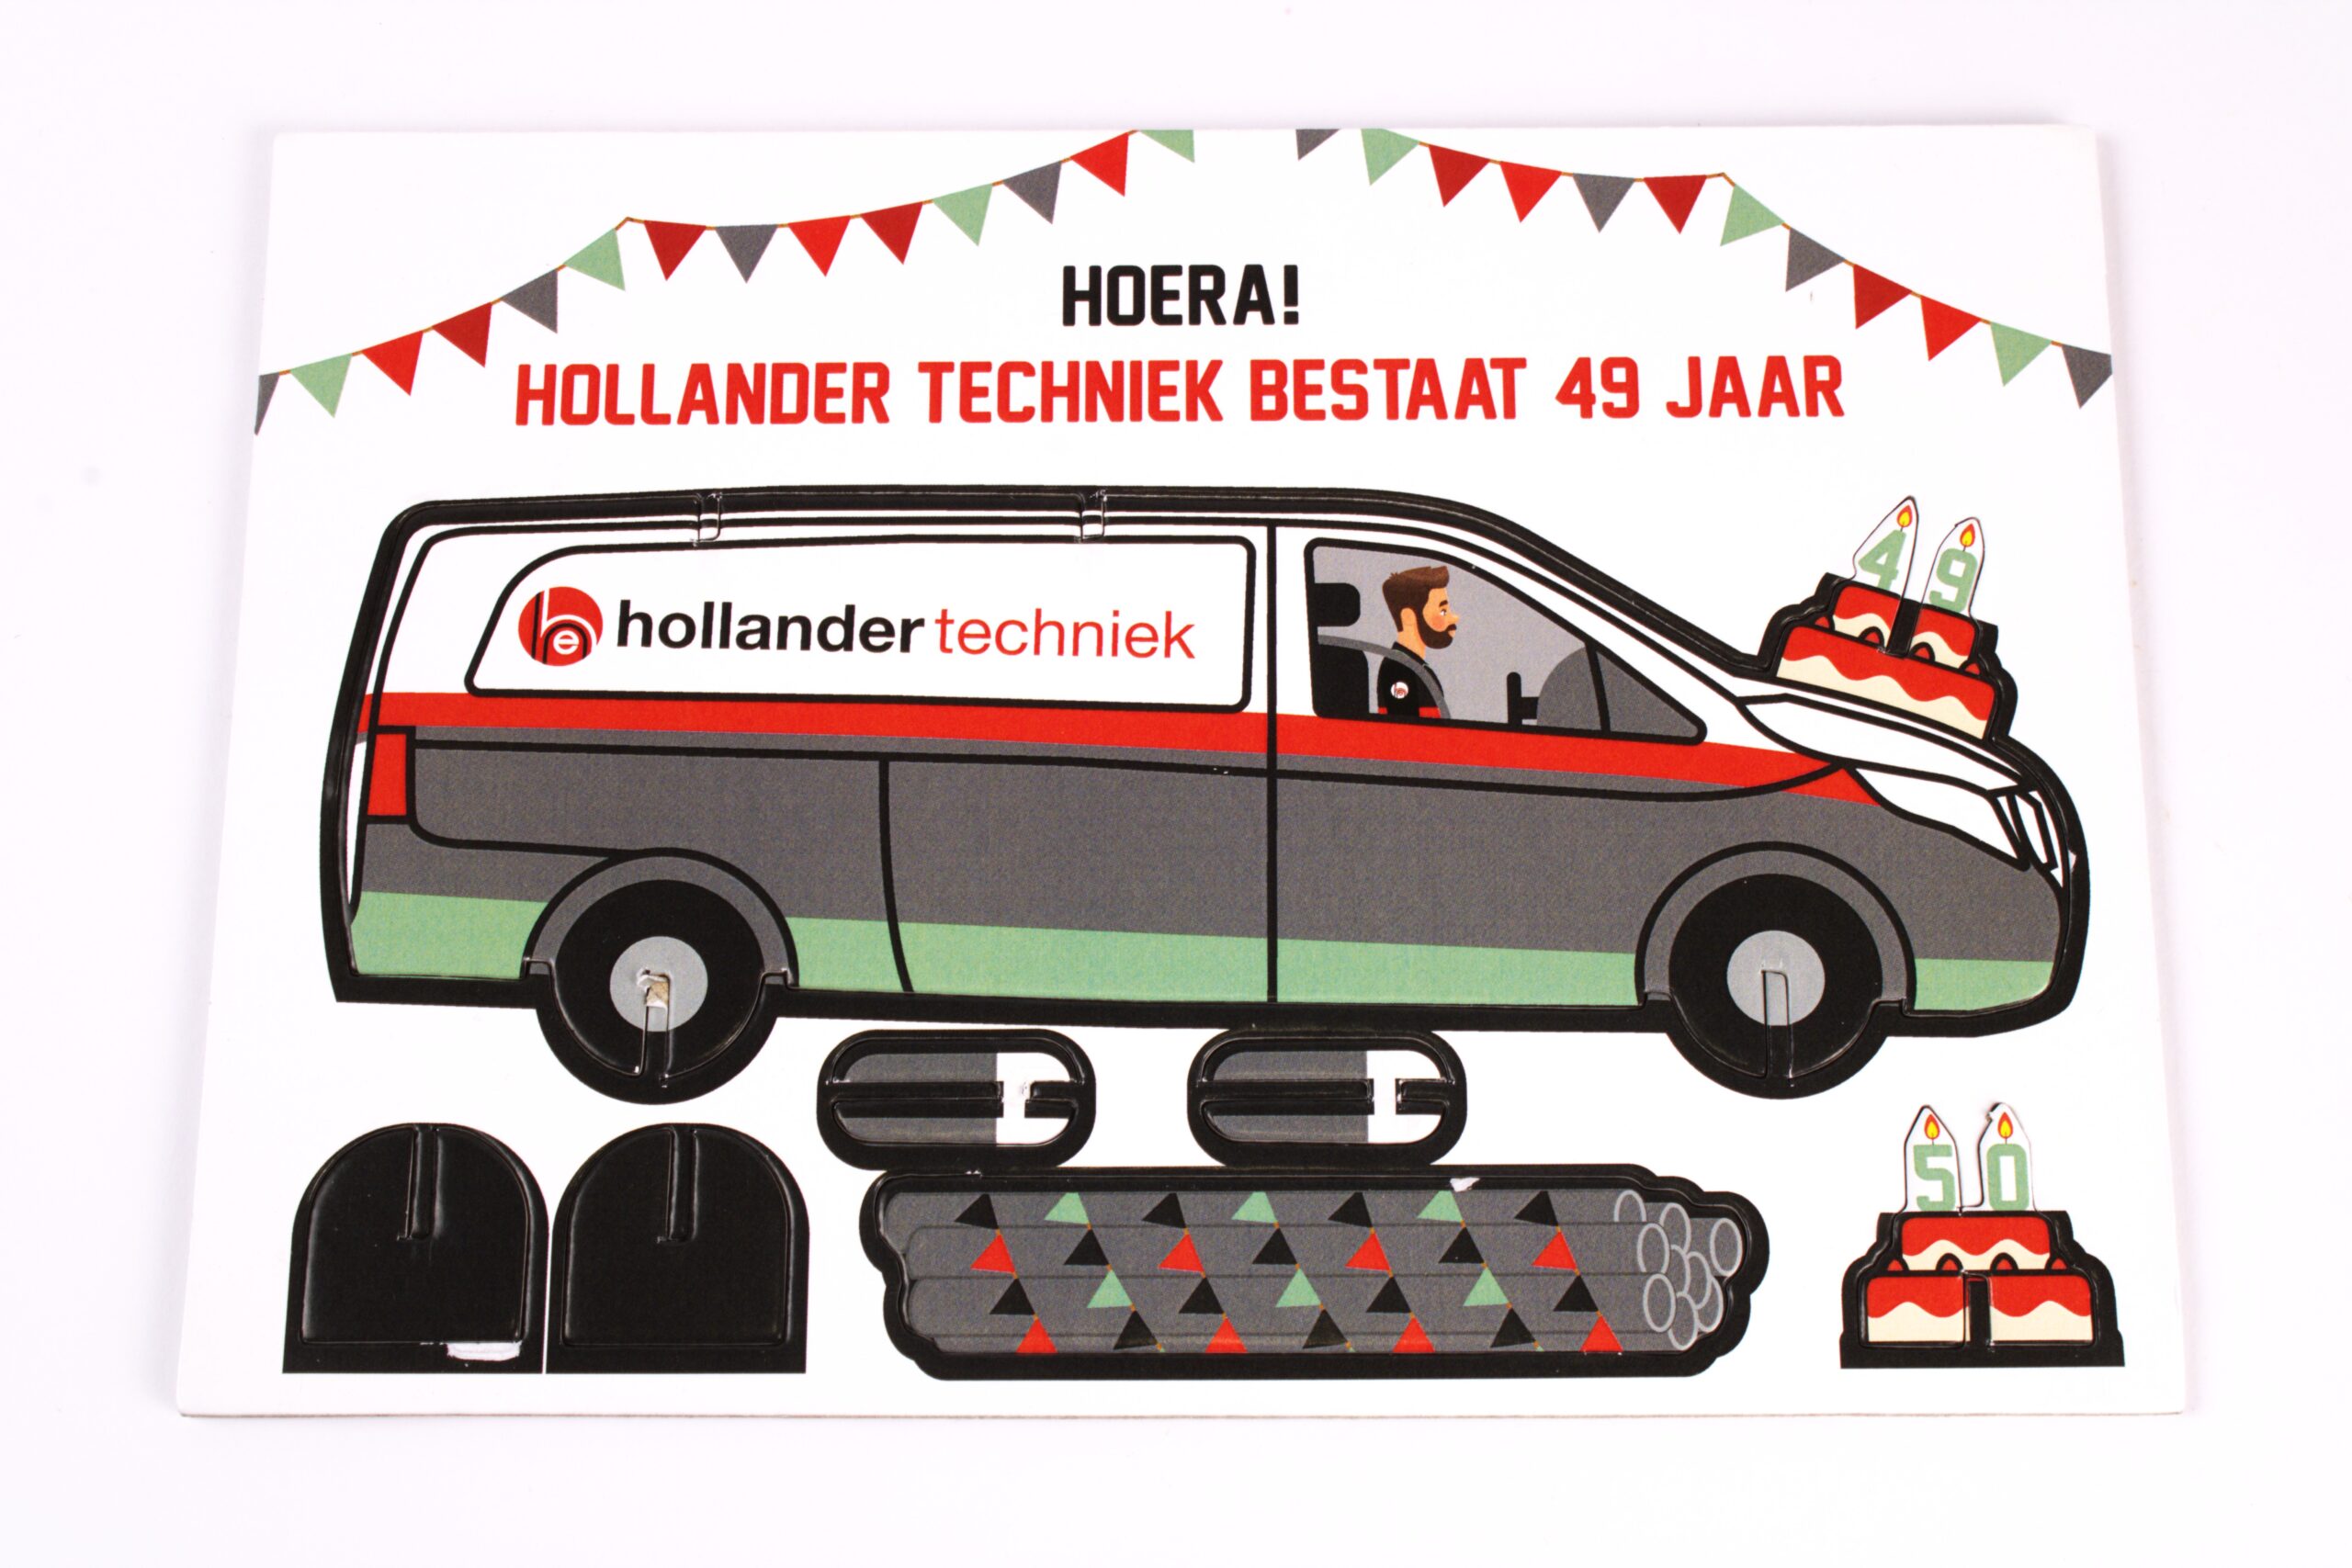 Half a century of Hollander Techniek: the big anniversary year!